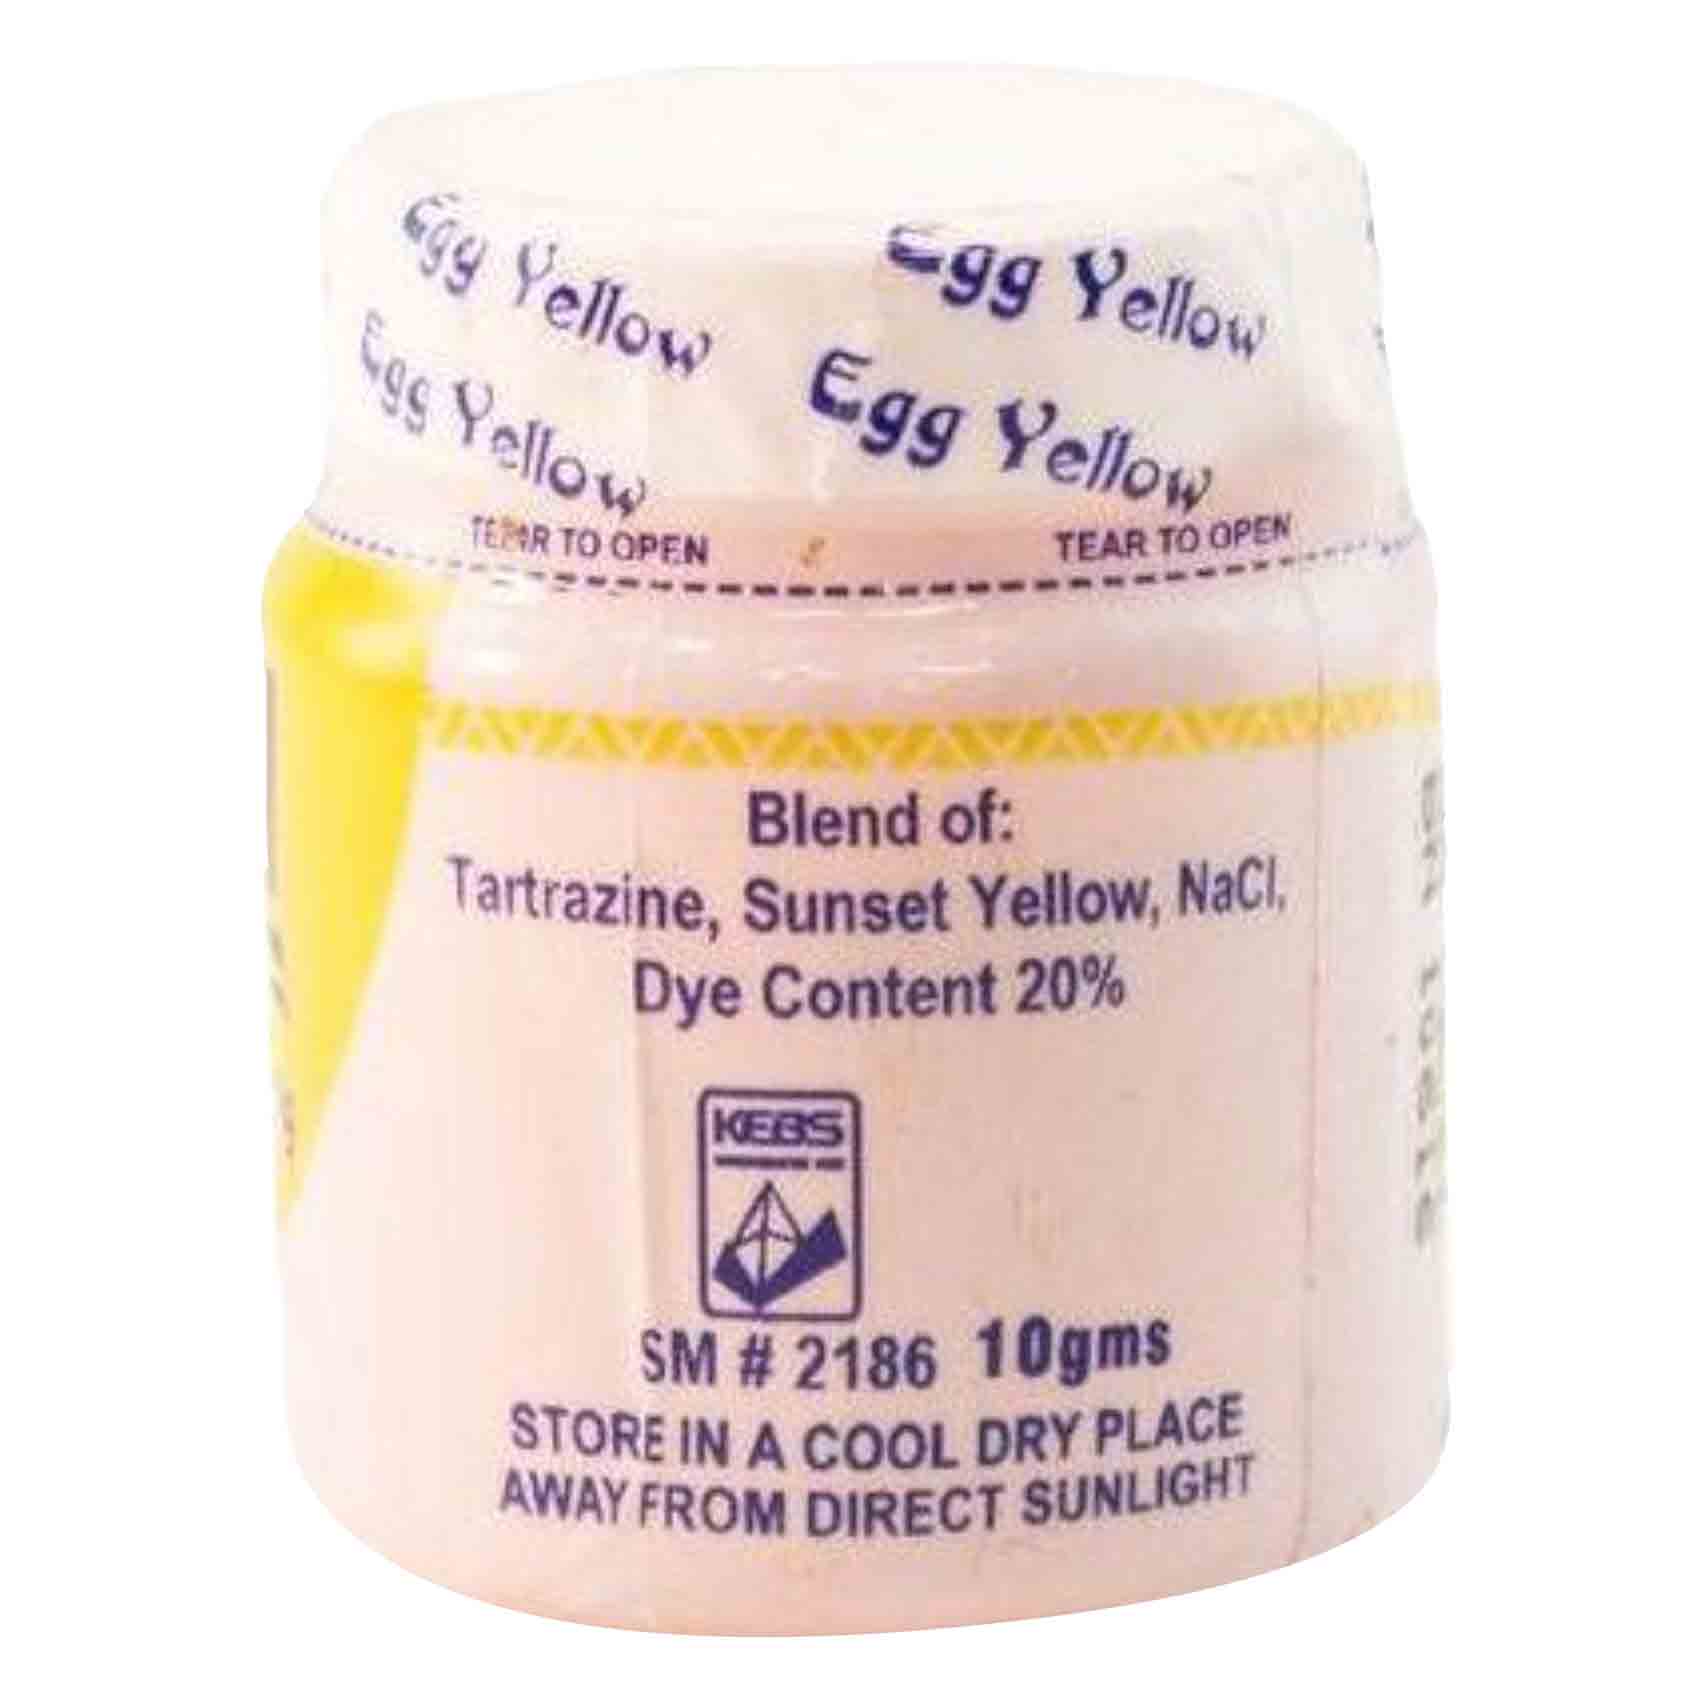 Festival Food Colour Egg Yellow 10g